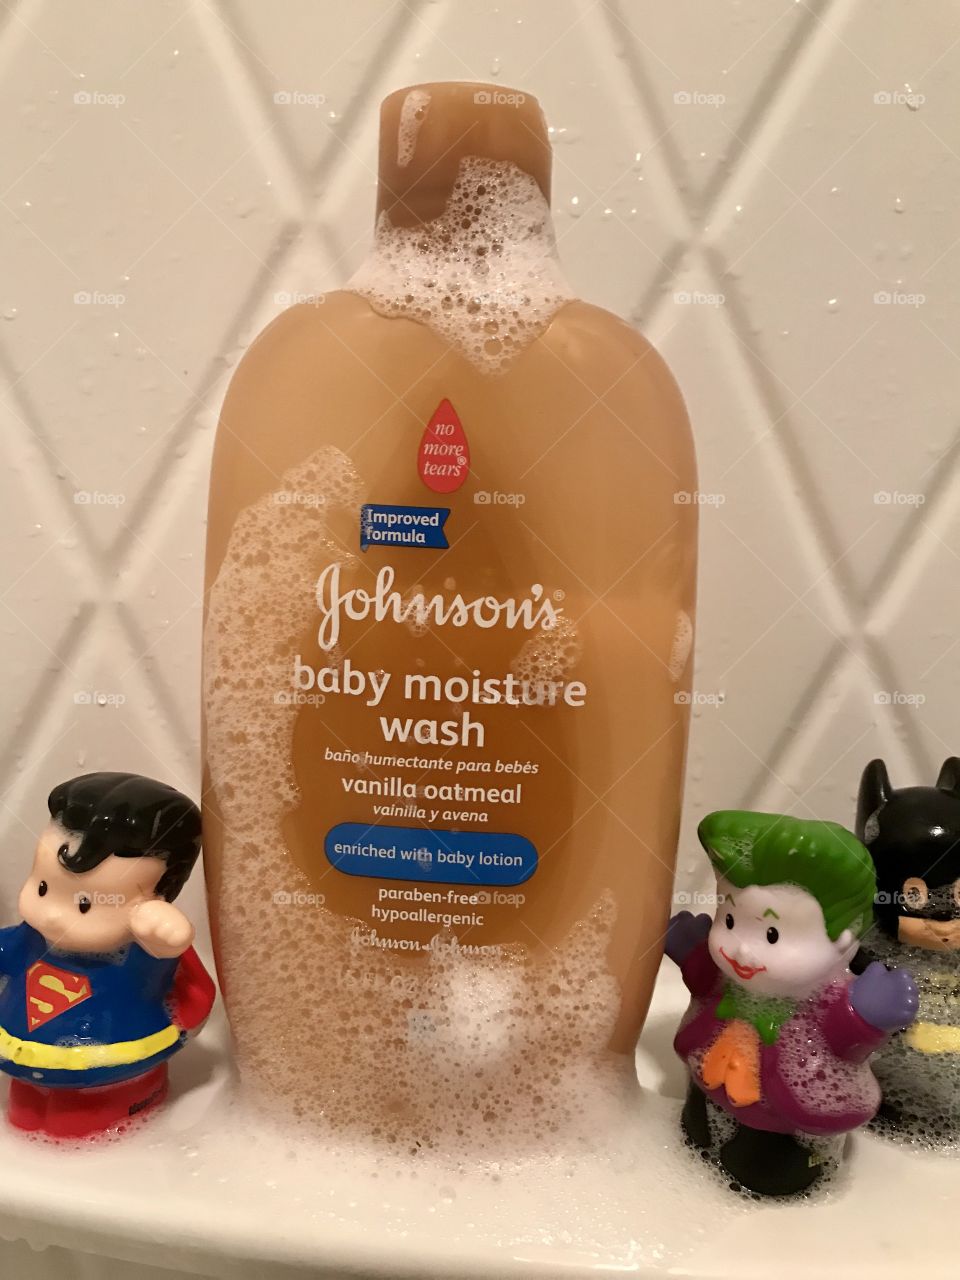 We use Johnson’s Vanilla Oatmeal Wash for my 3 year old son’s “SUPER” sensitive skin. 